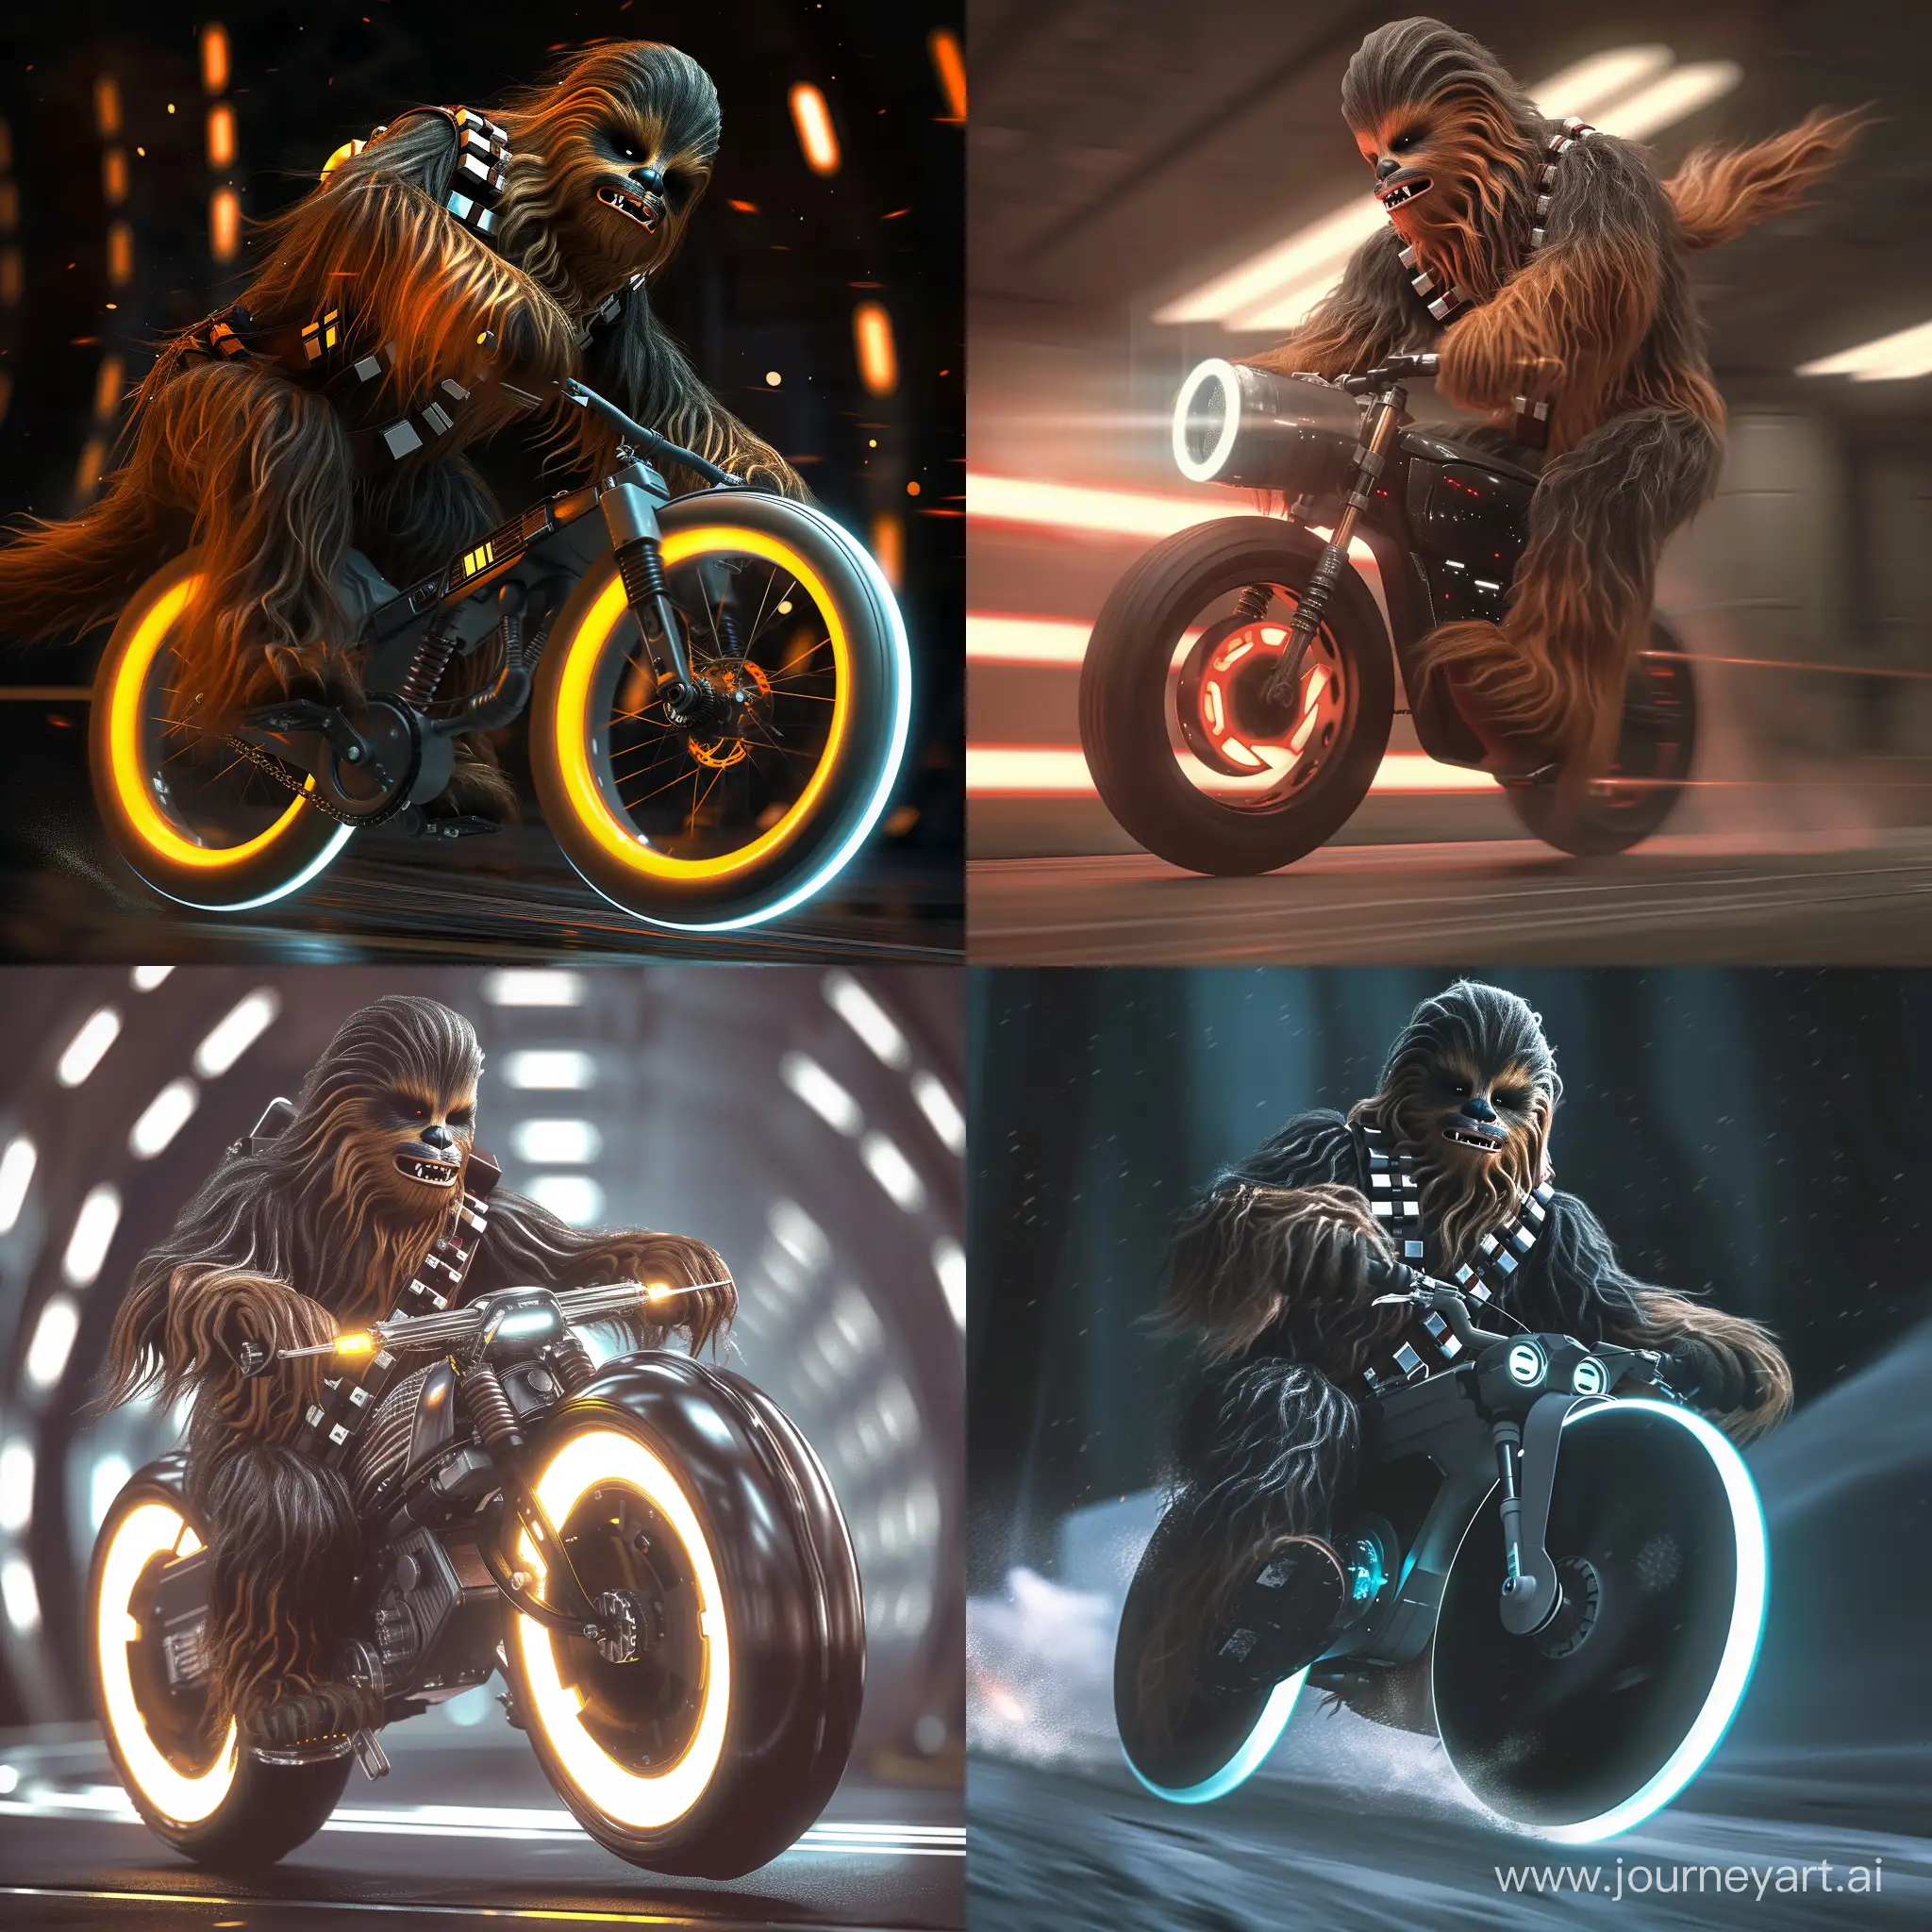 Photorealistic-Chewbacca-Riding-Tron-Bike-in-8K-Resolution